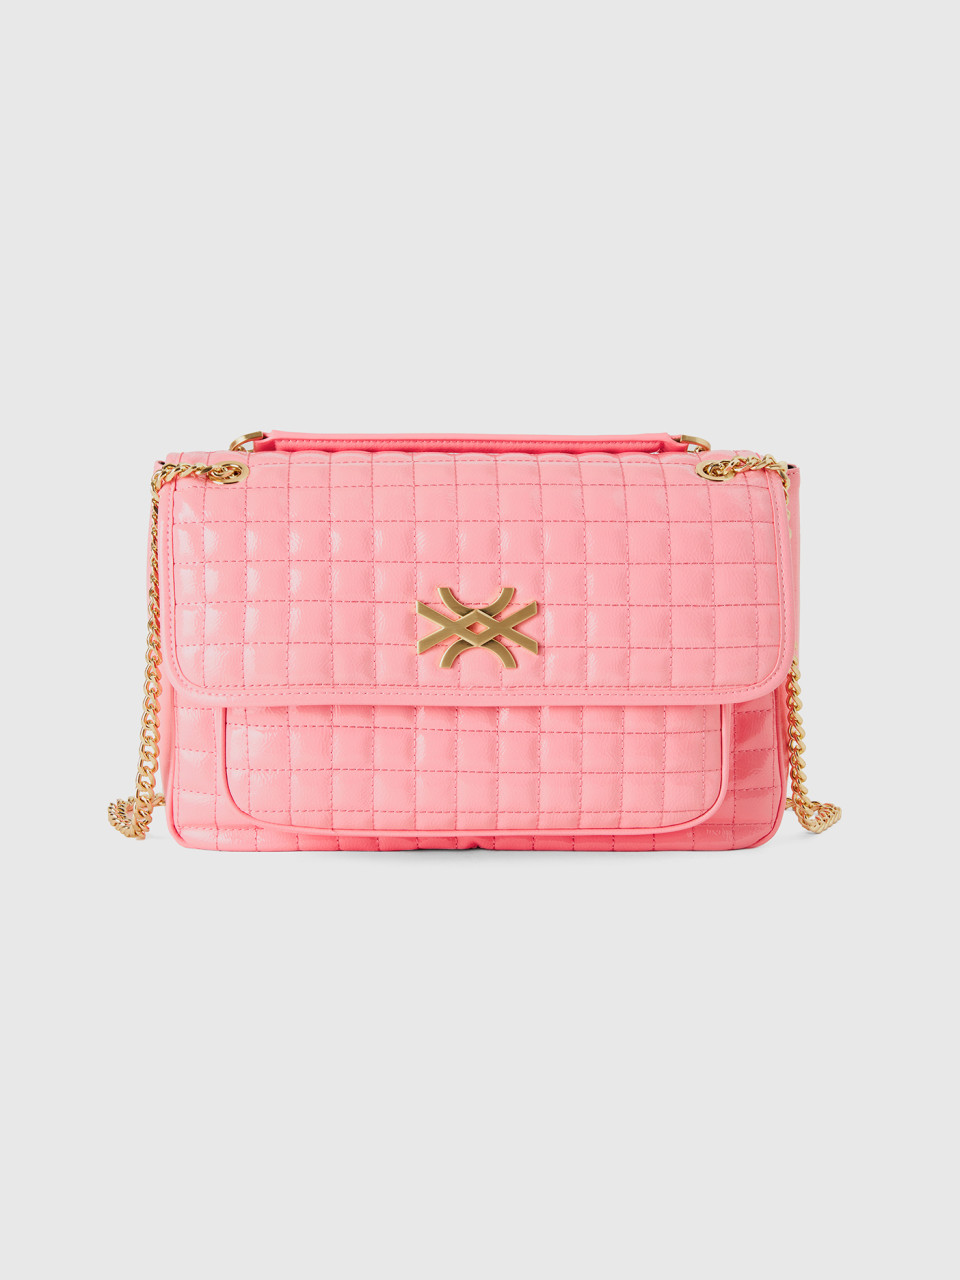 Benetton, Glossy Pink Large Bag, Pink, Women